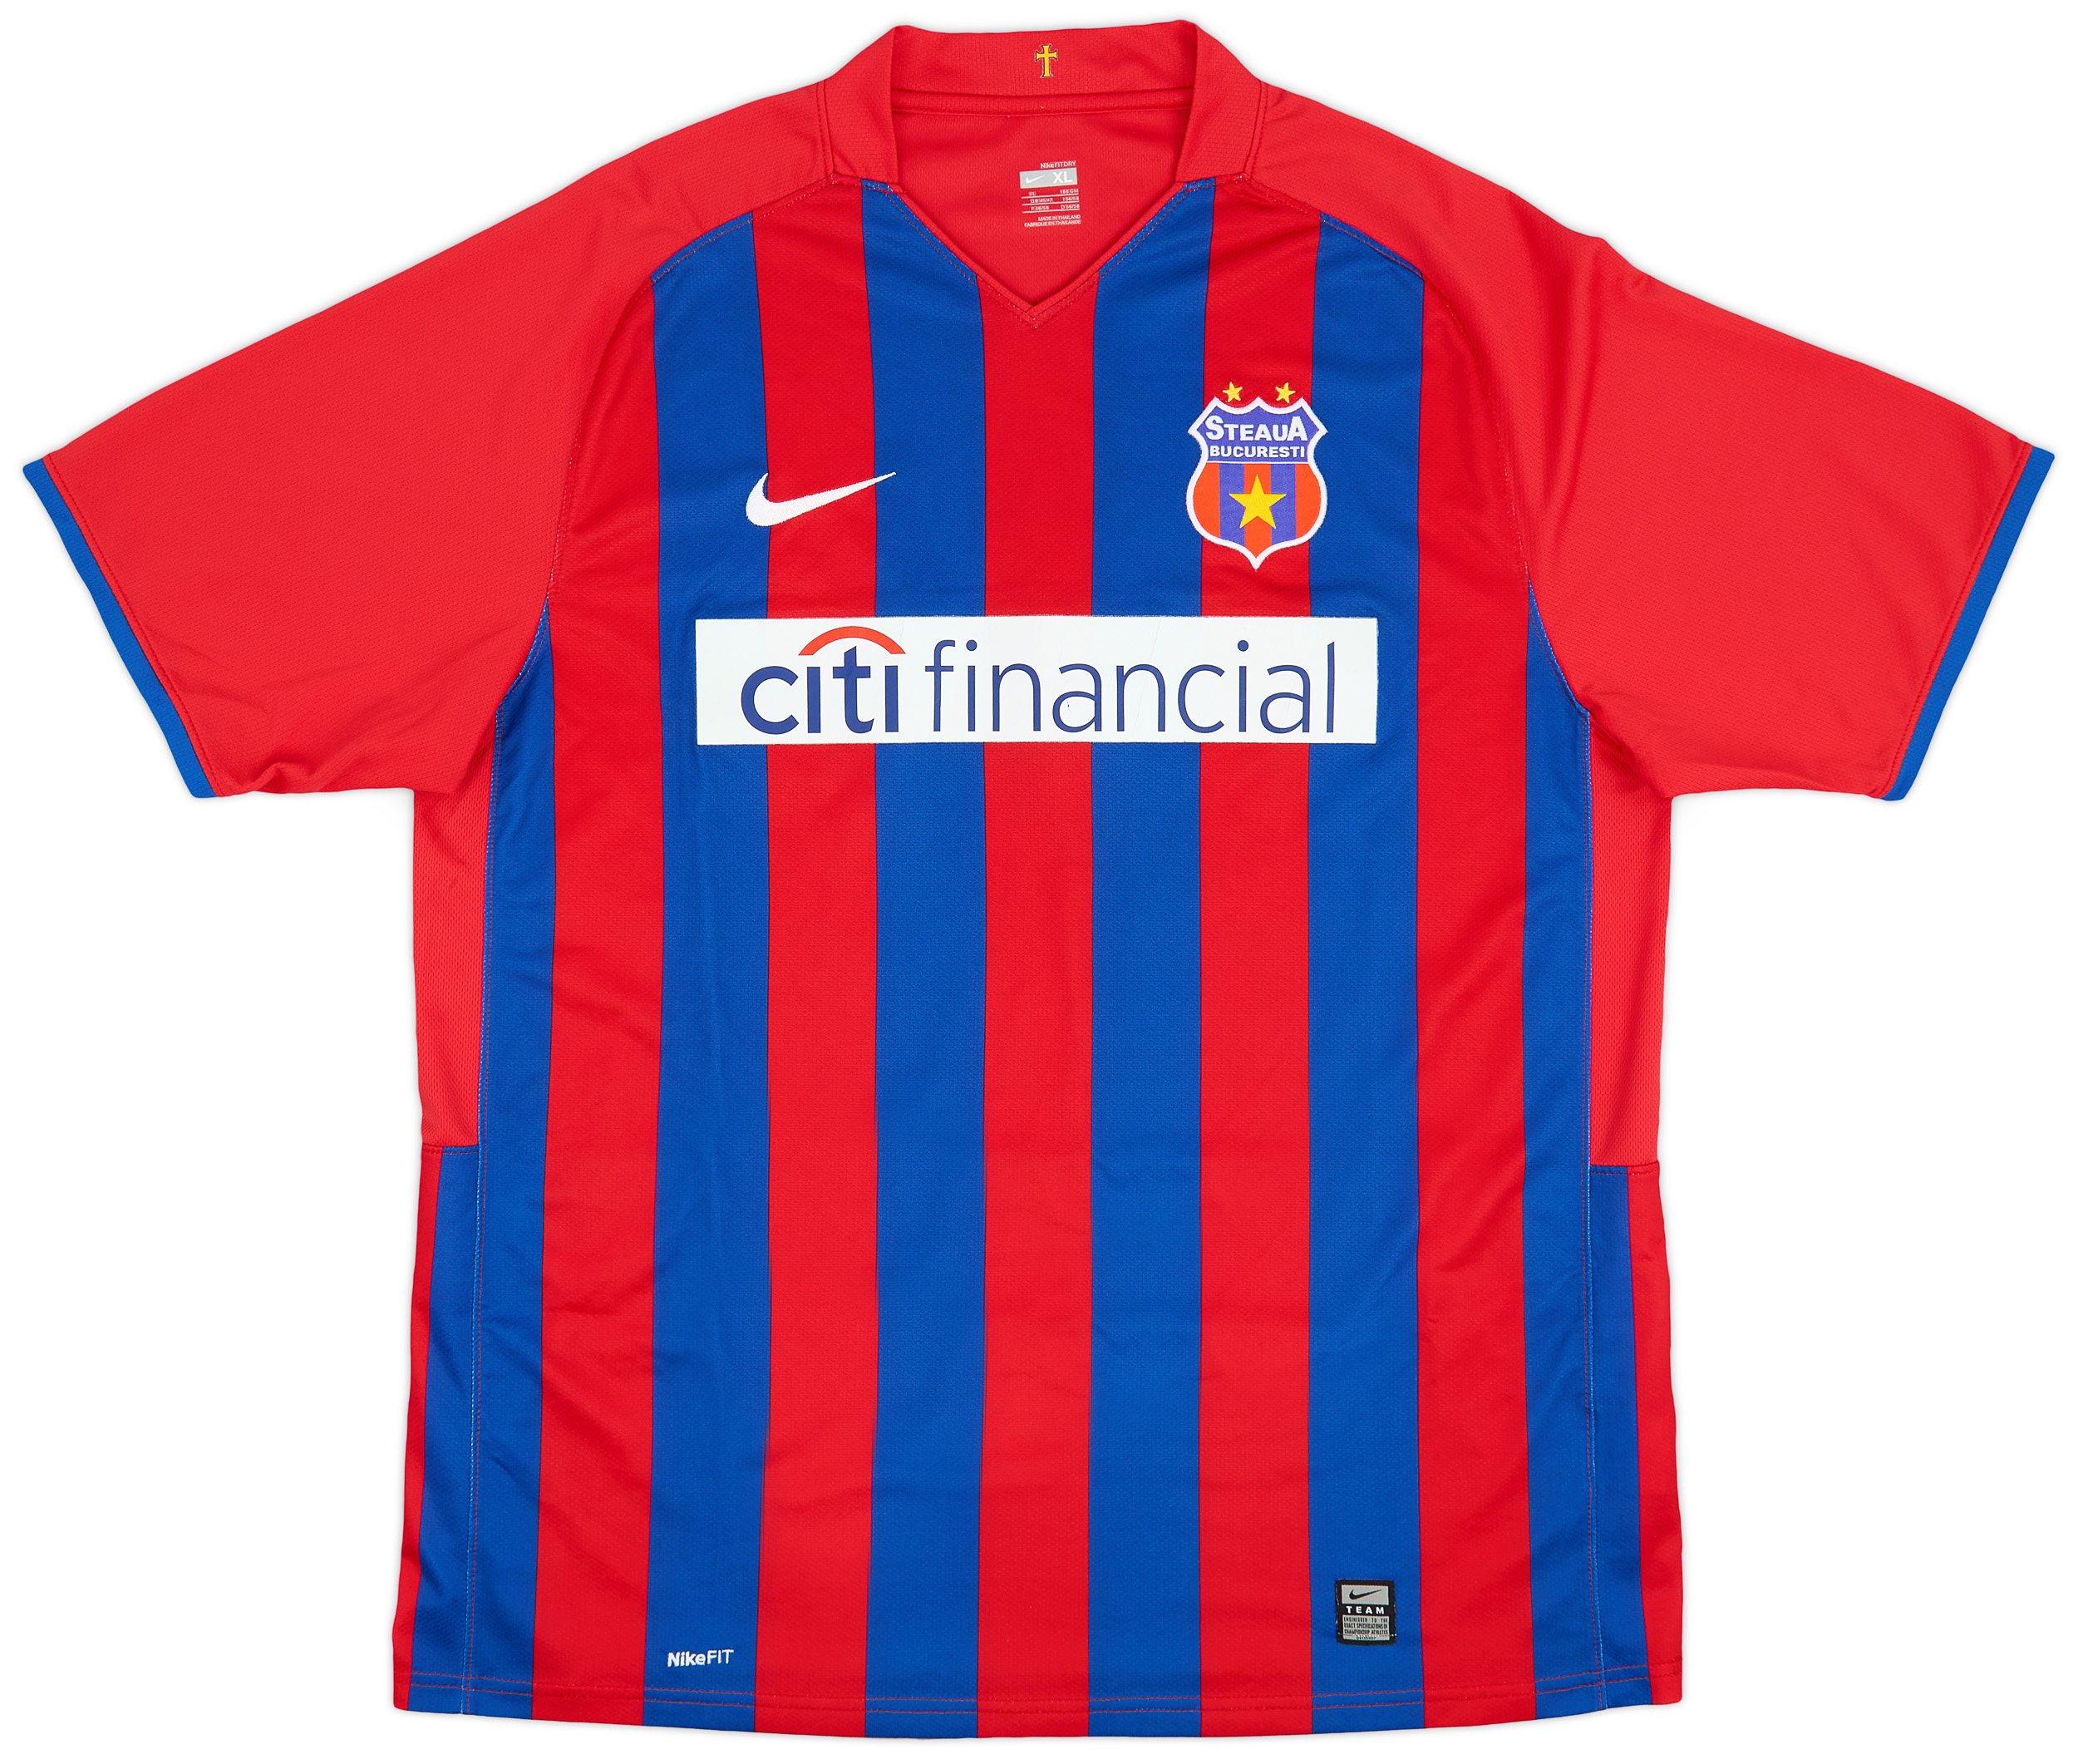 CSA Steaua București  home shirt (Original)